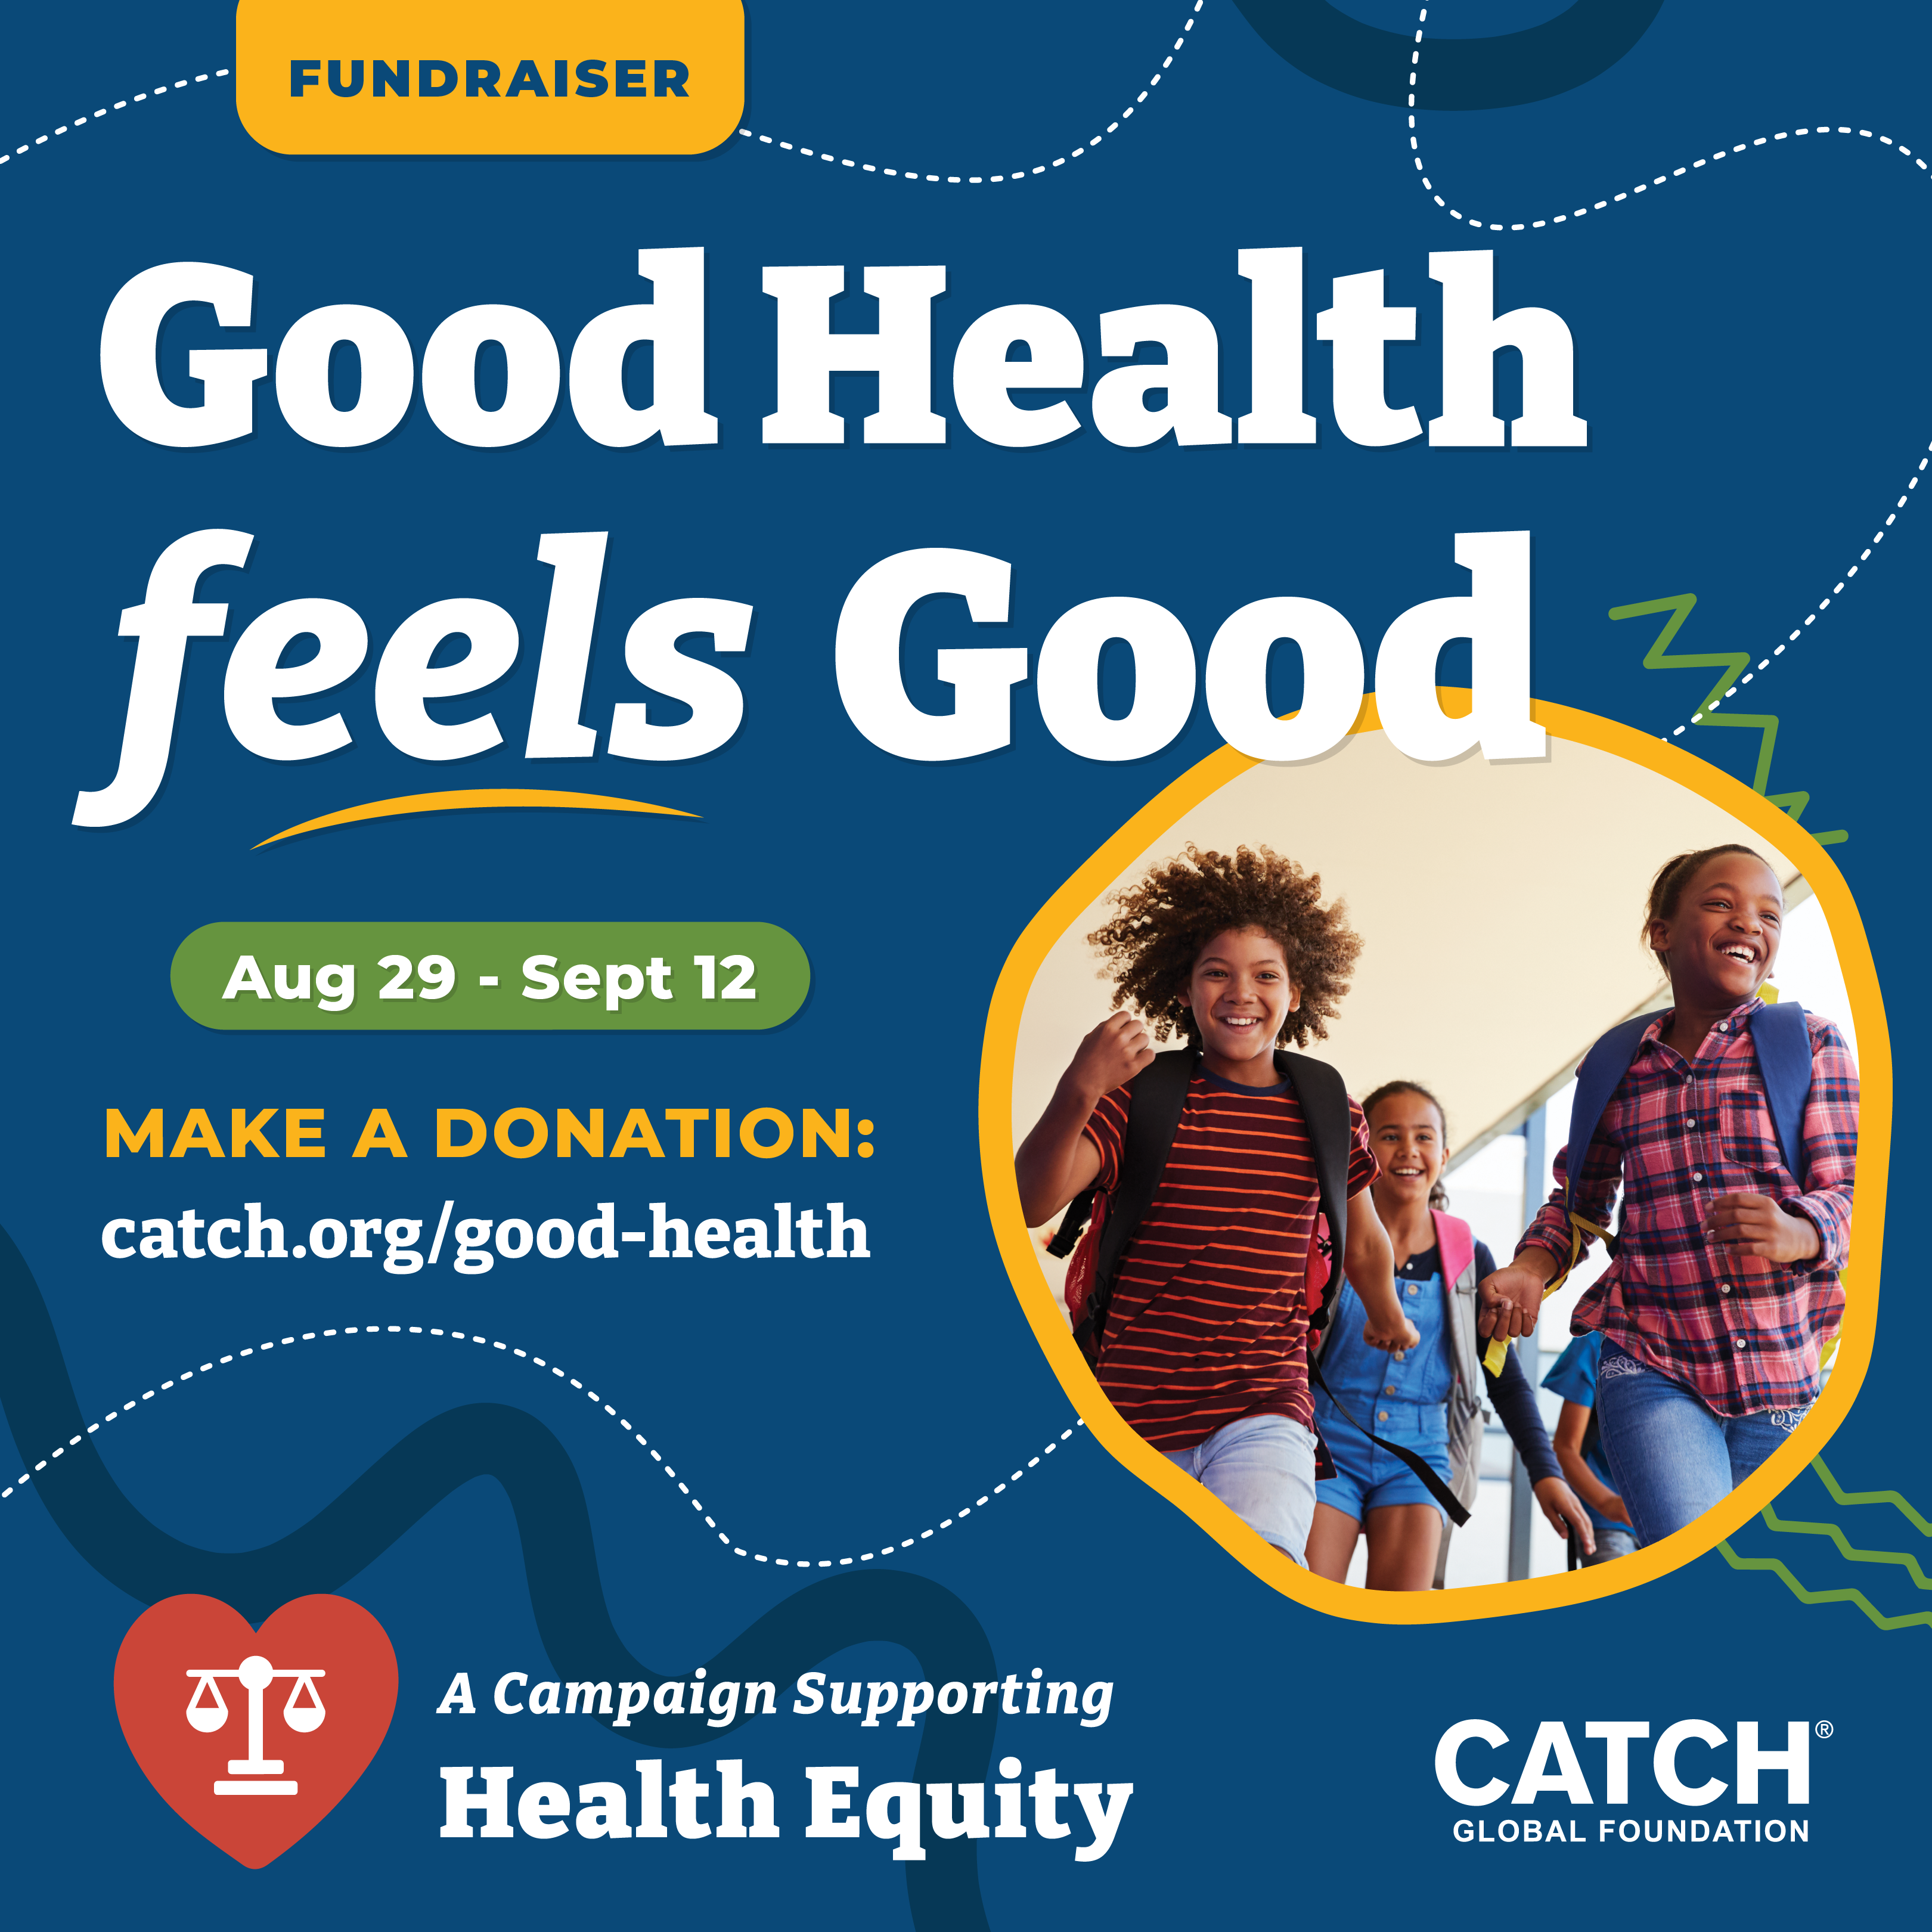 Good Health Feels Good Square Fundraising Image